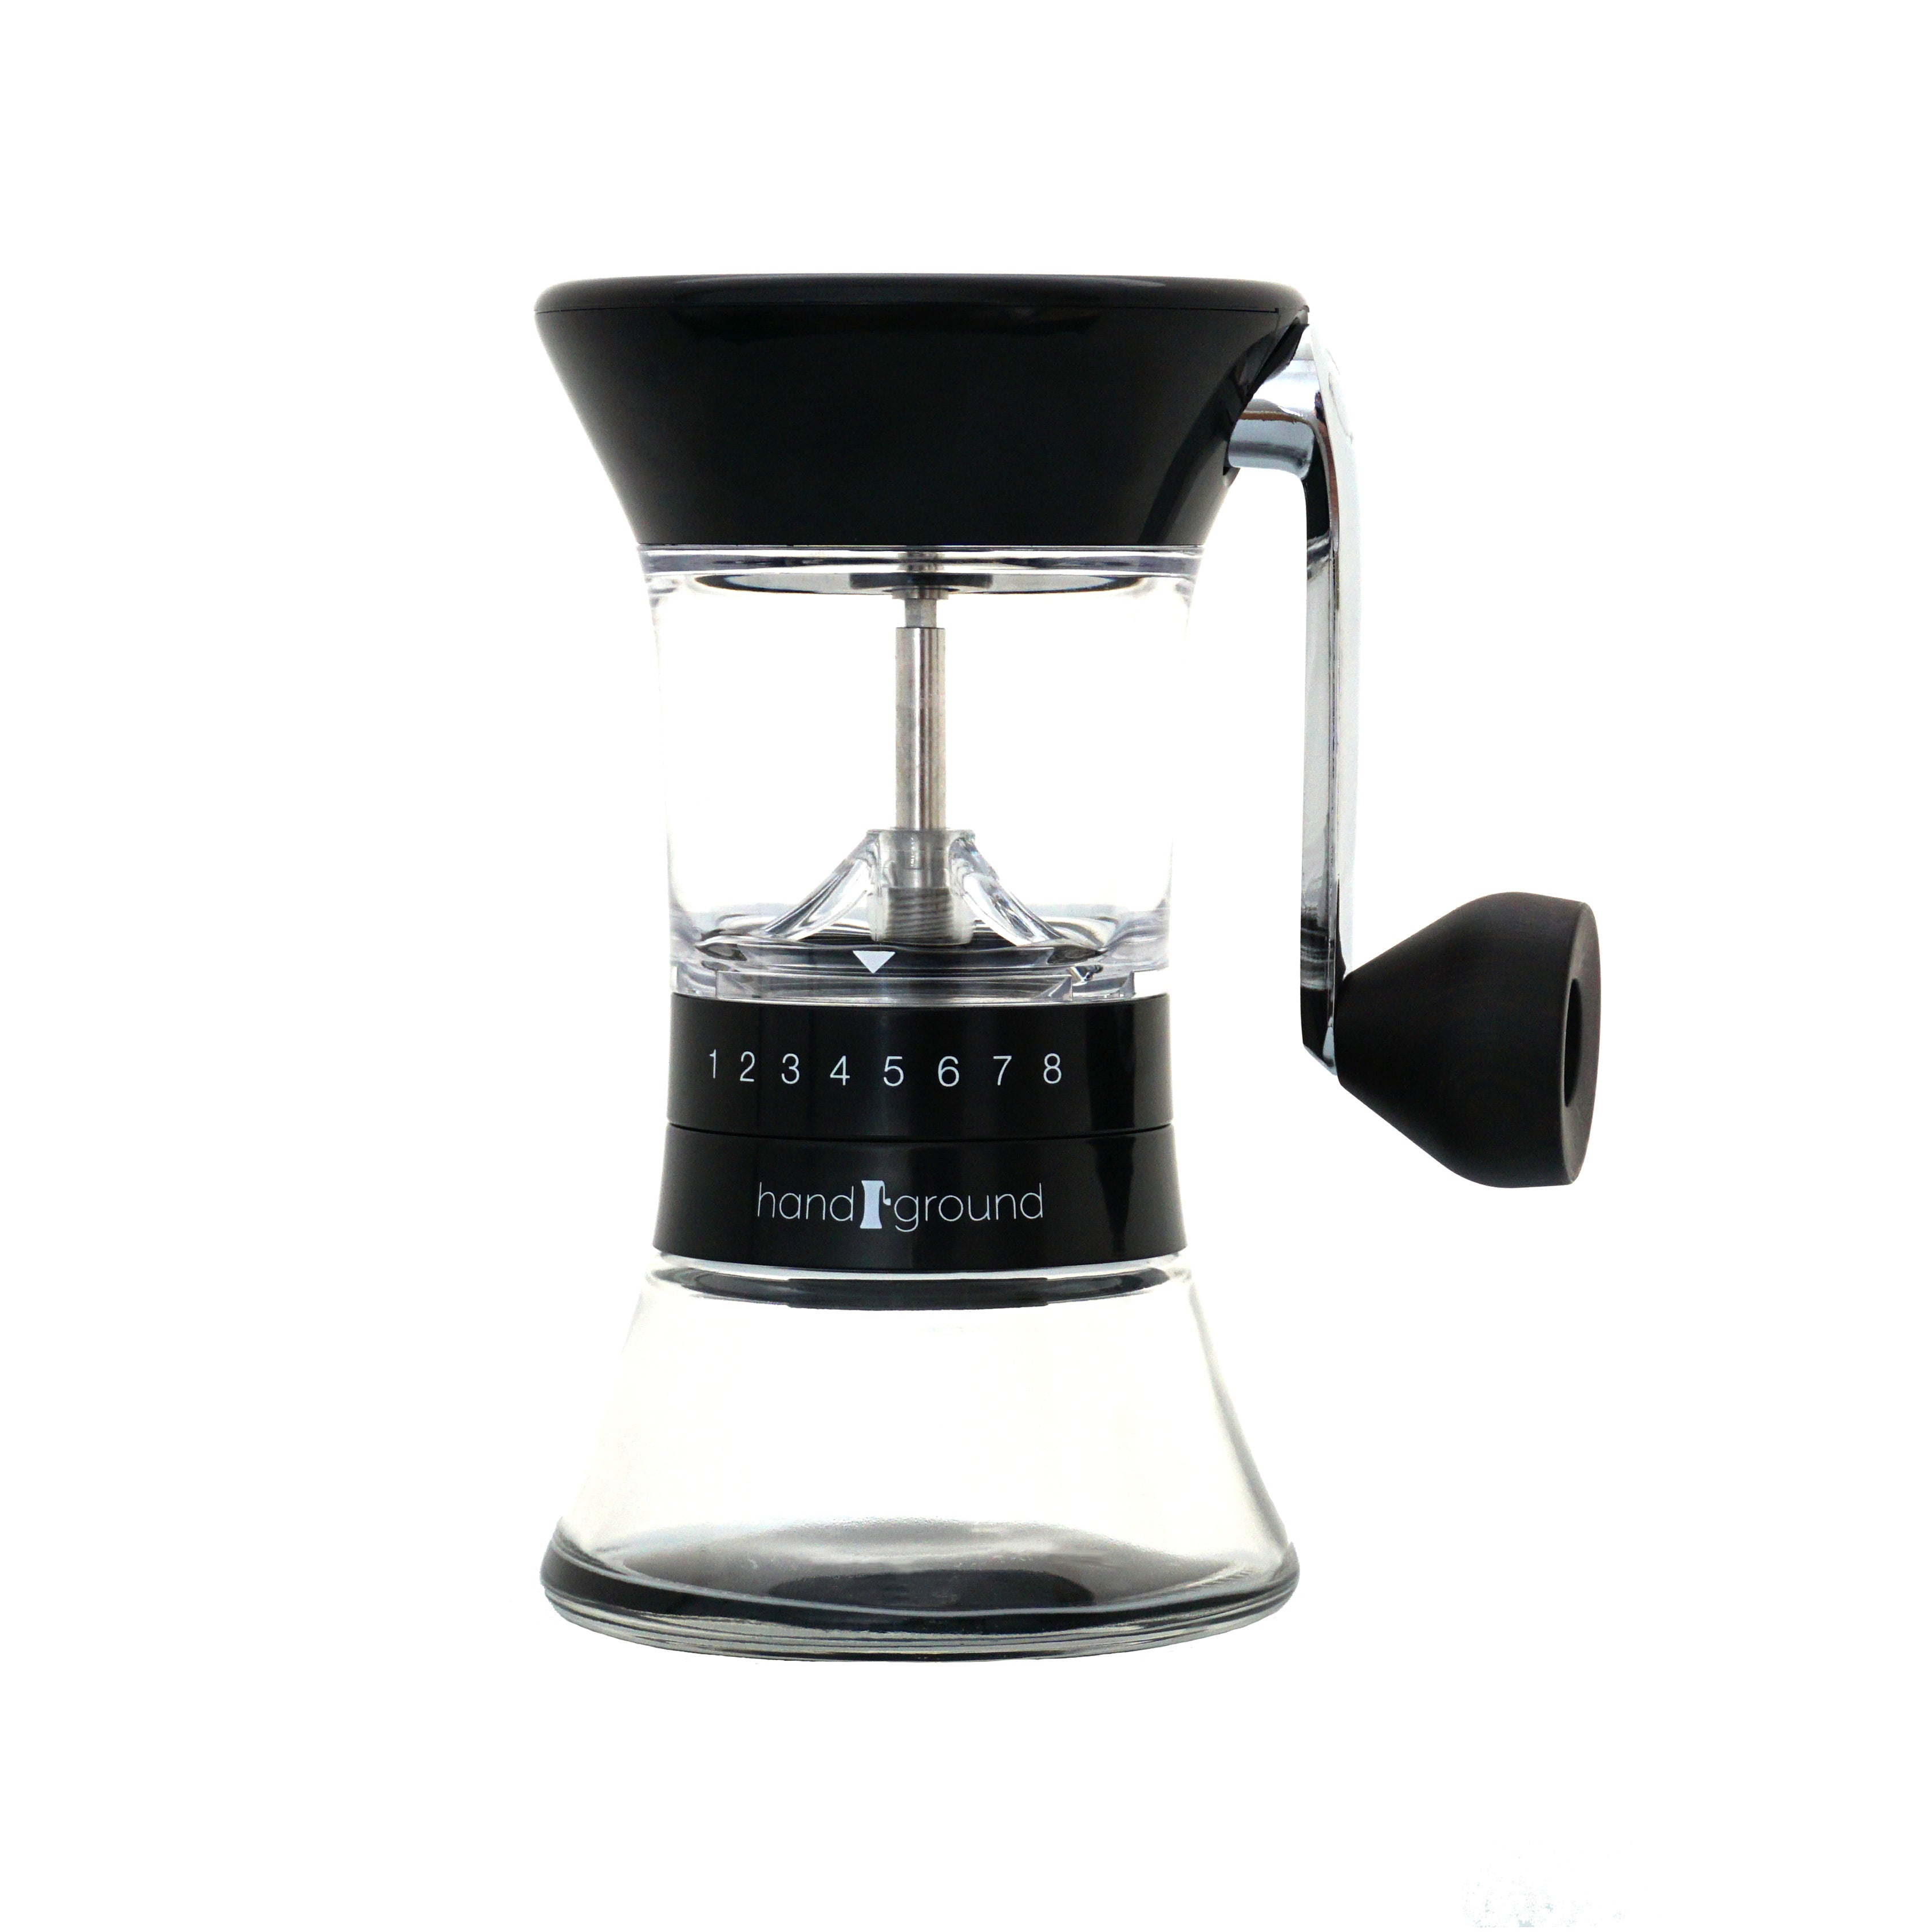 Handground Precision Manual Coffee Grinder: Black